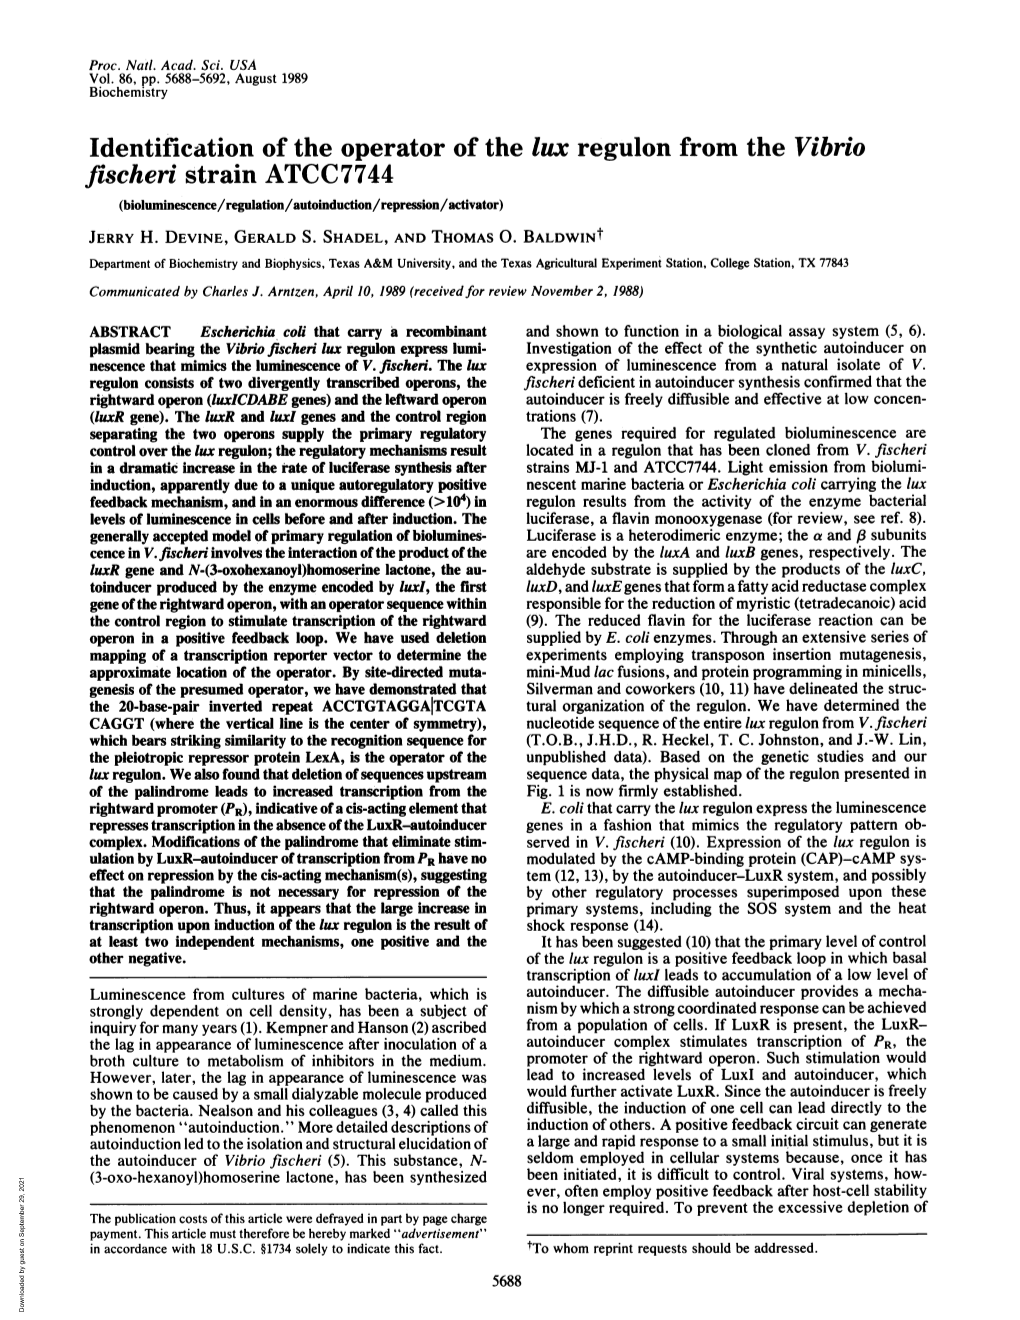 Fischeri Strain ATCC7744 (Bioluminescence/Regulation/Autoinduction/Repression/Activator) JERRY H